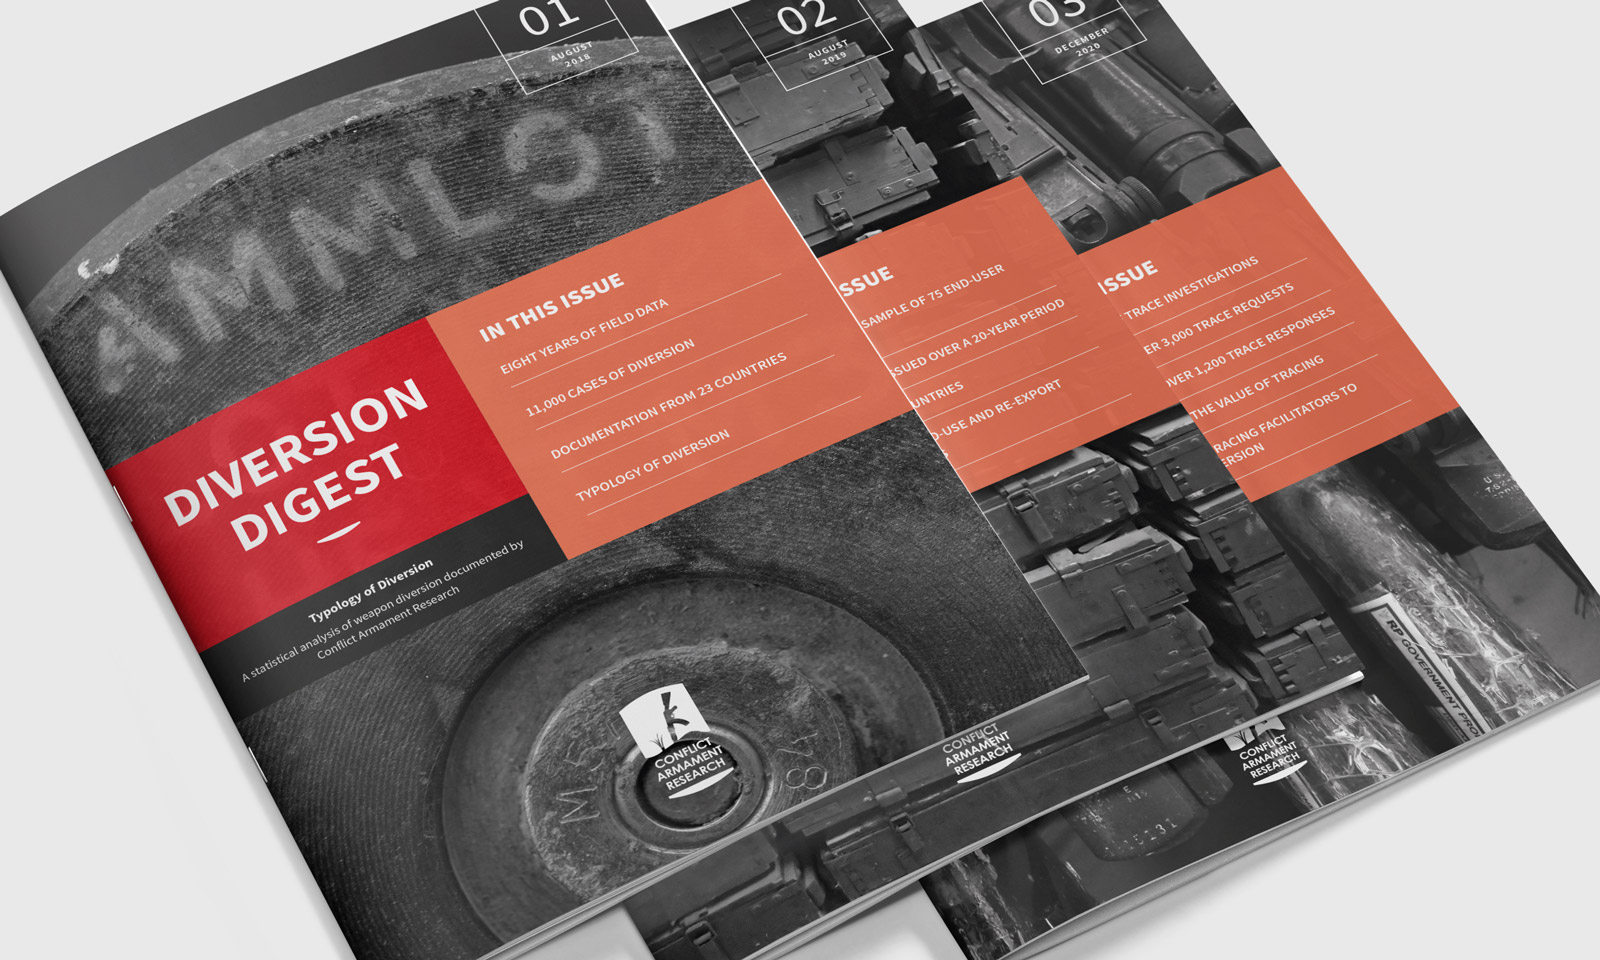 digest report design - diversion digest - covers